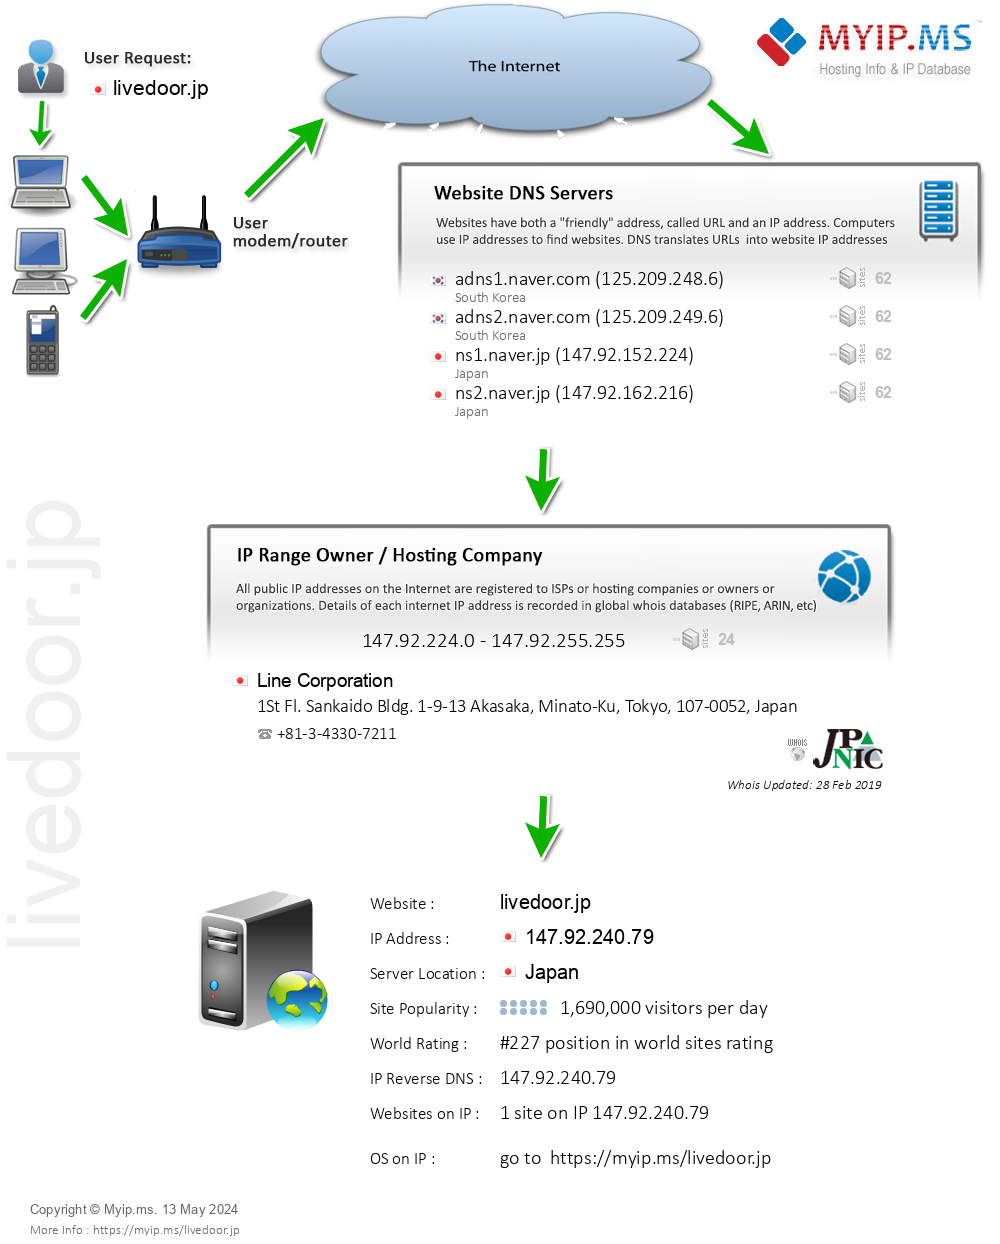 Livedoor.jp - Website Hosting Visual IP Diagram